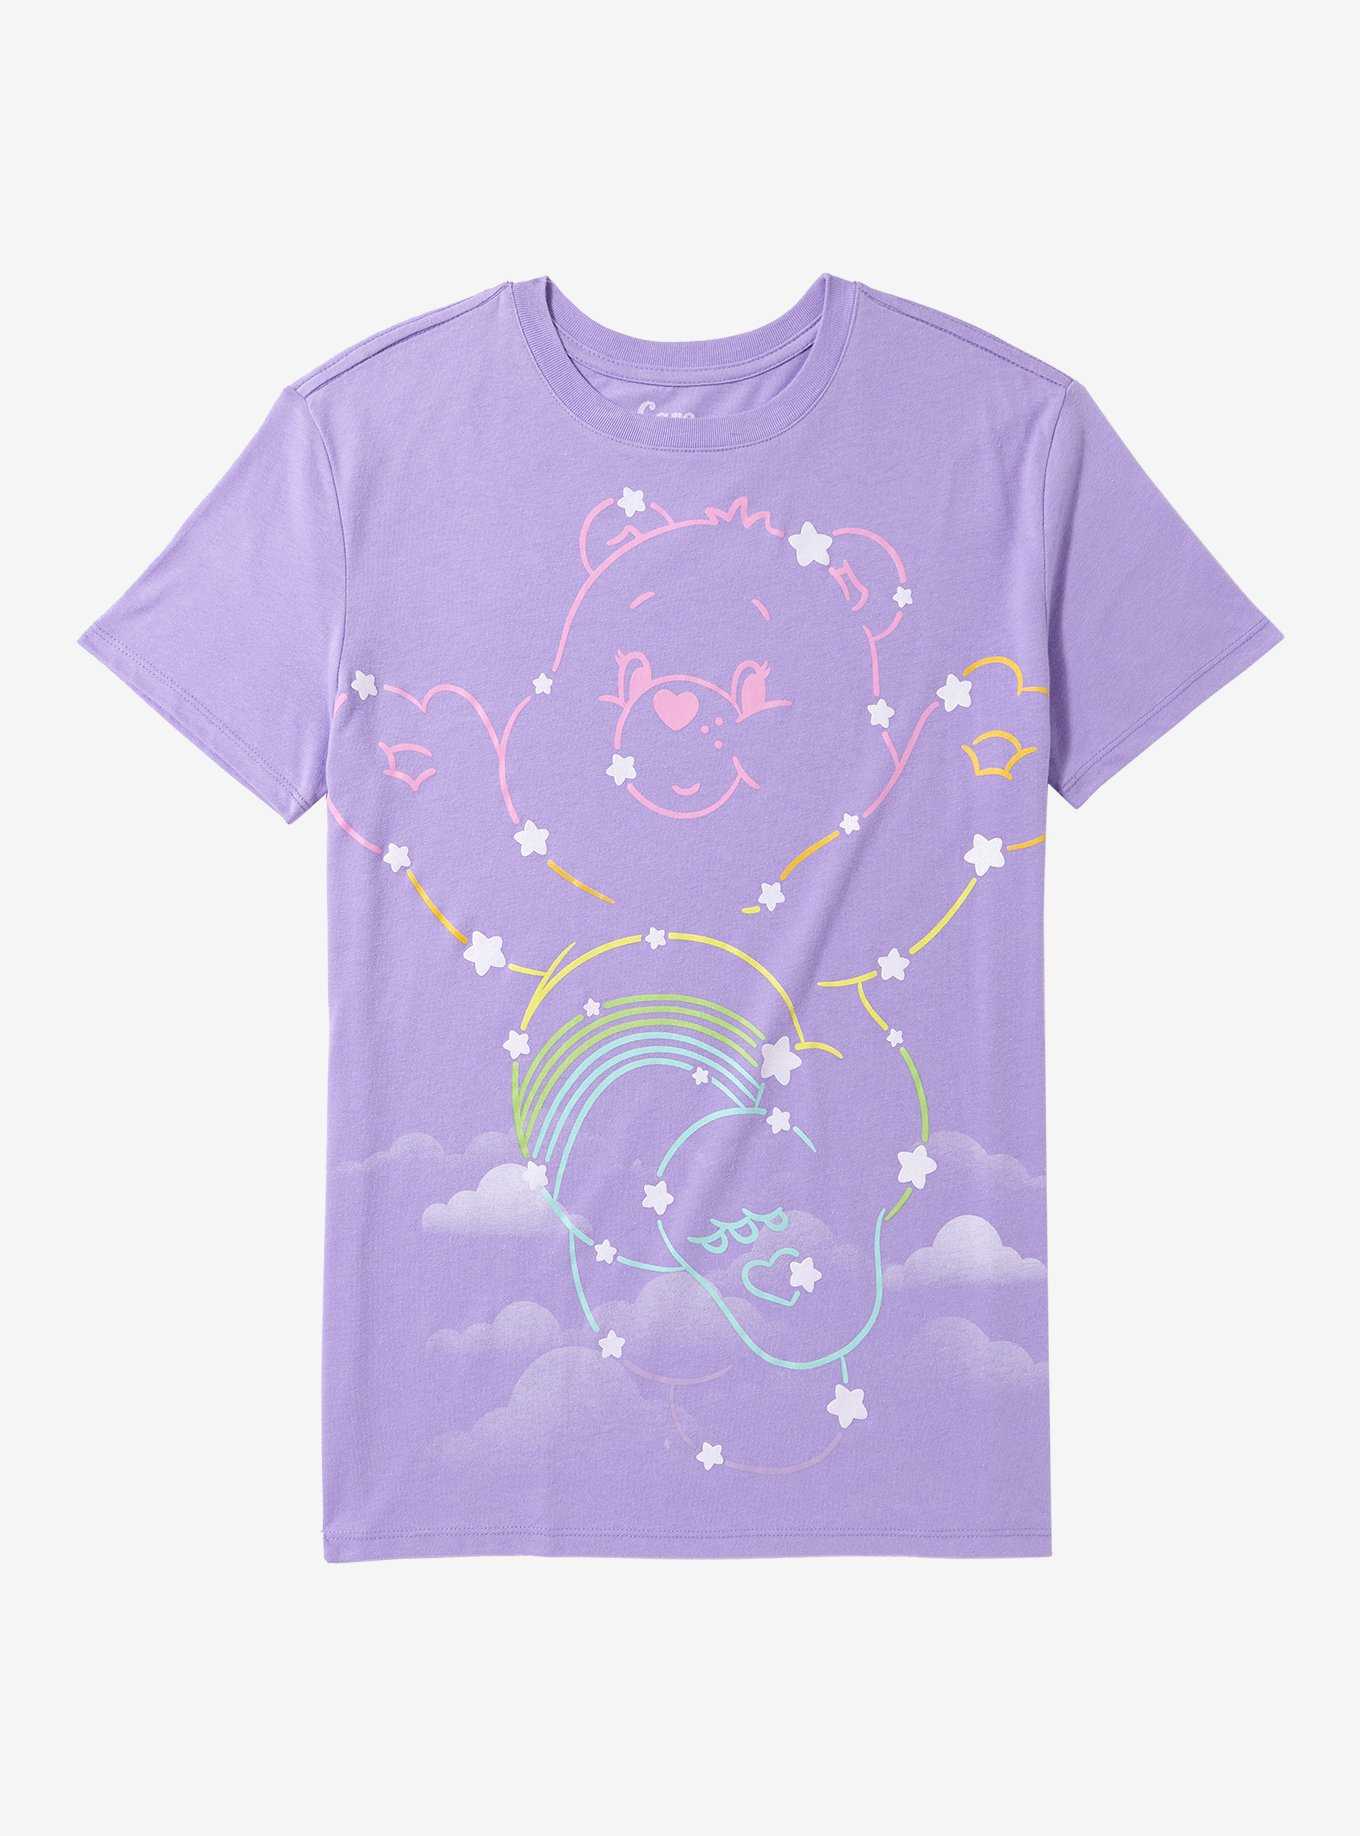 Care Bears Glitter Star Rainbow Boyfriend Fit Girls T-Shirt, , hi-res